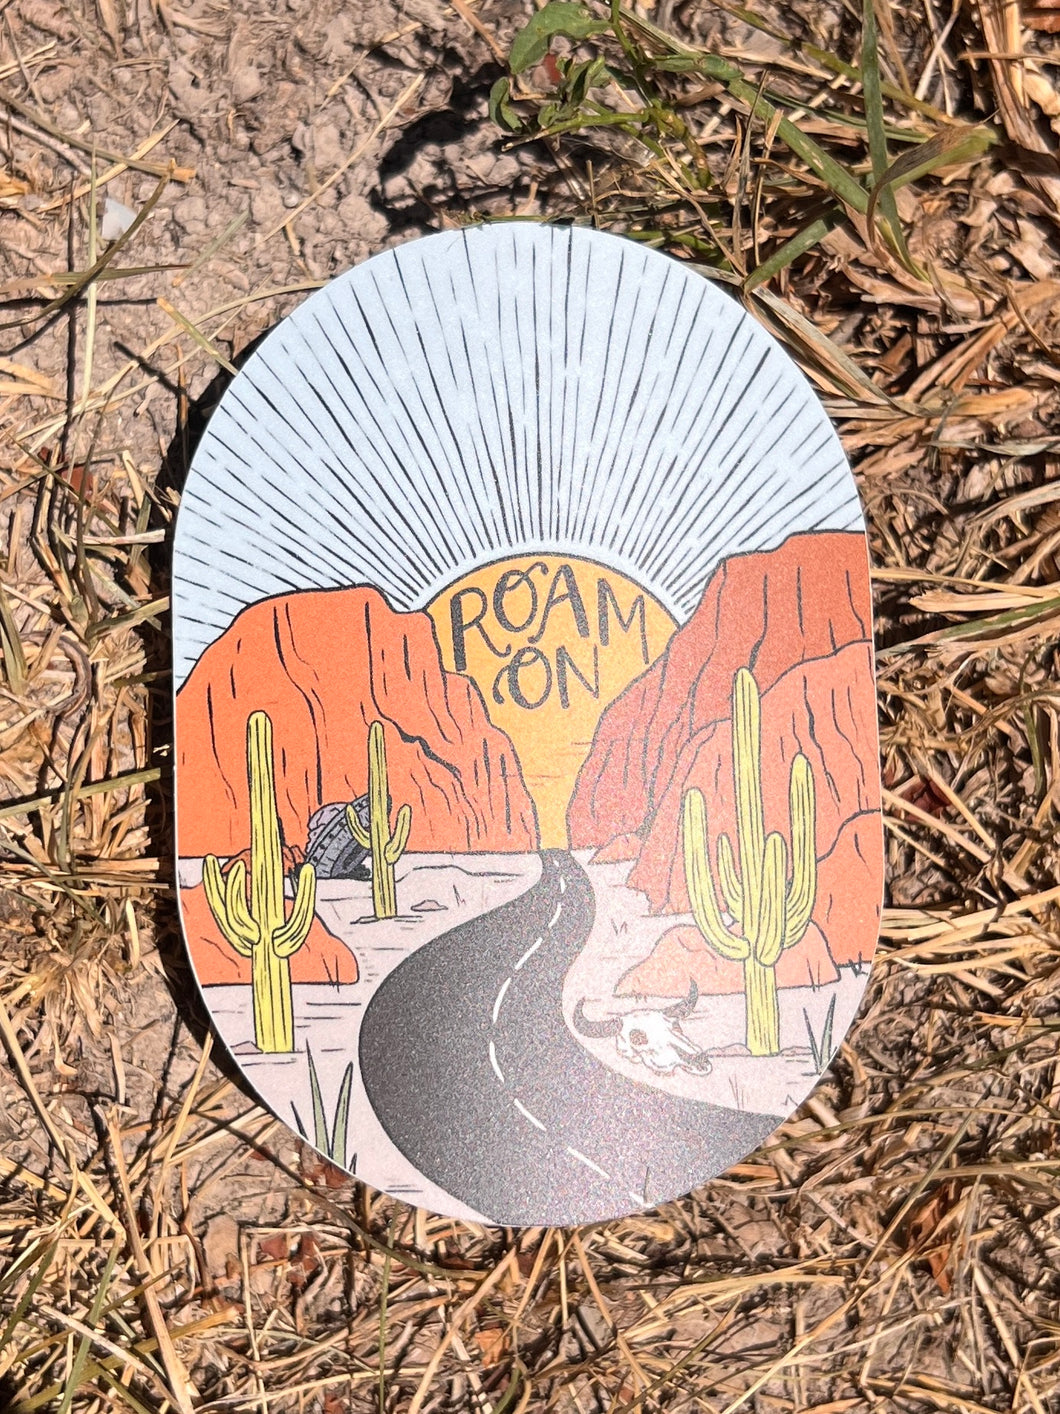 Roam On Vinyl Sticker